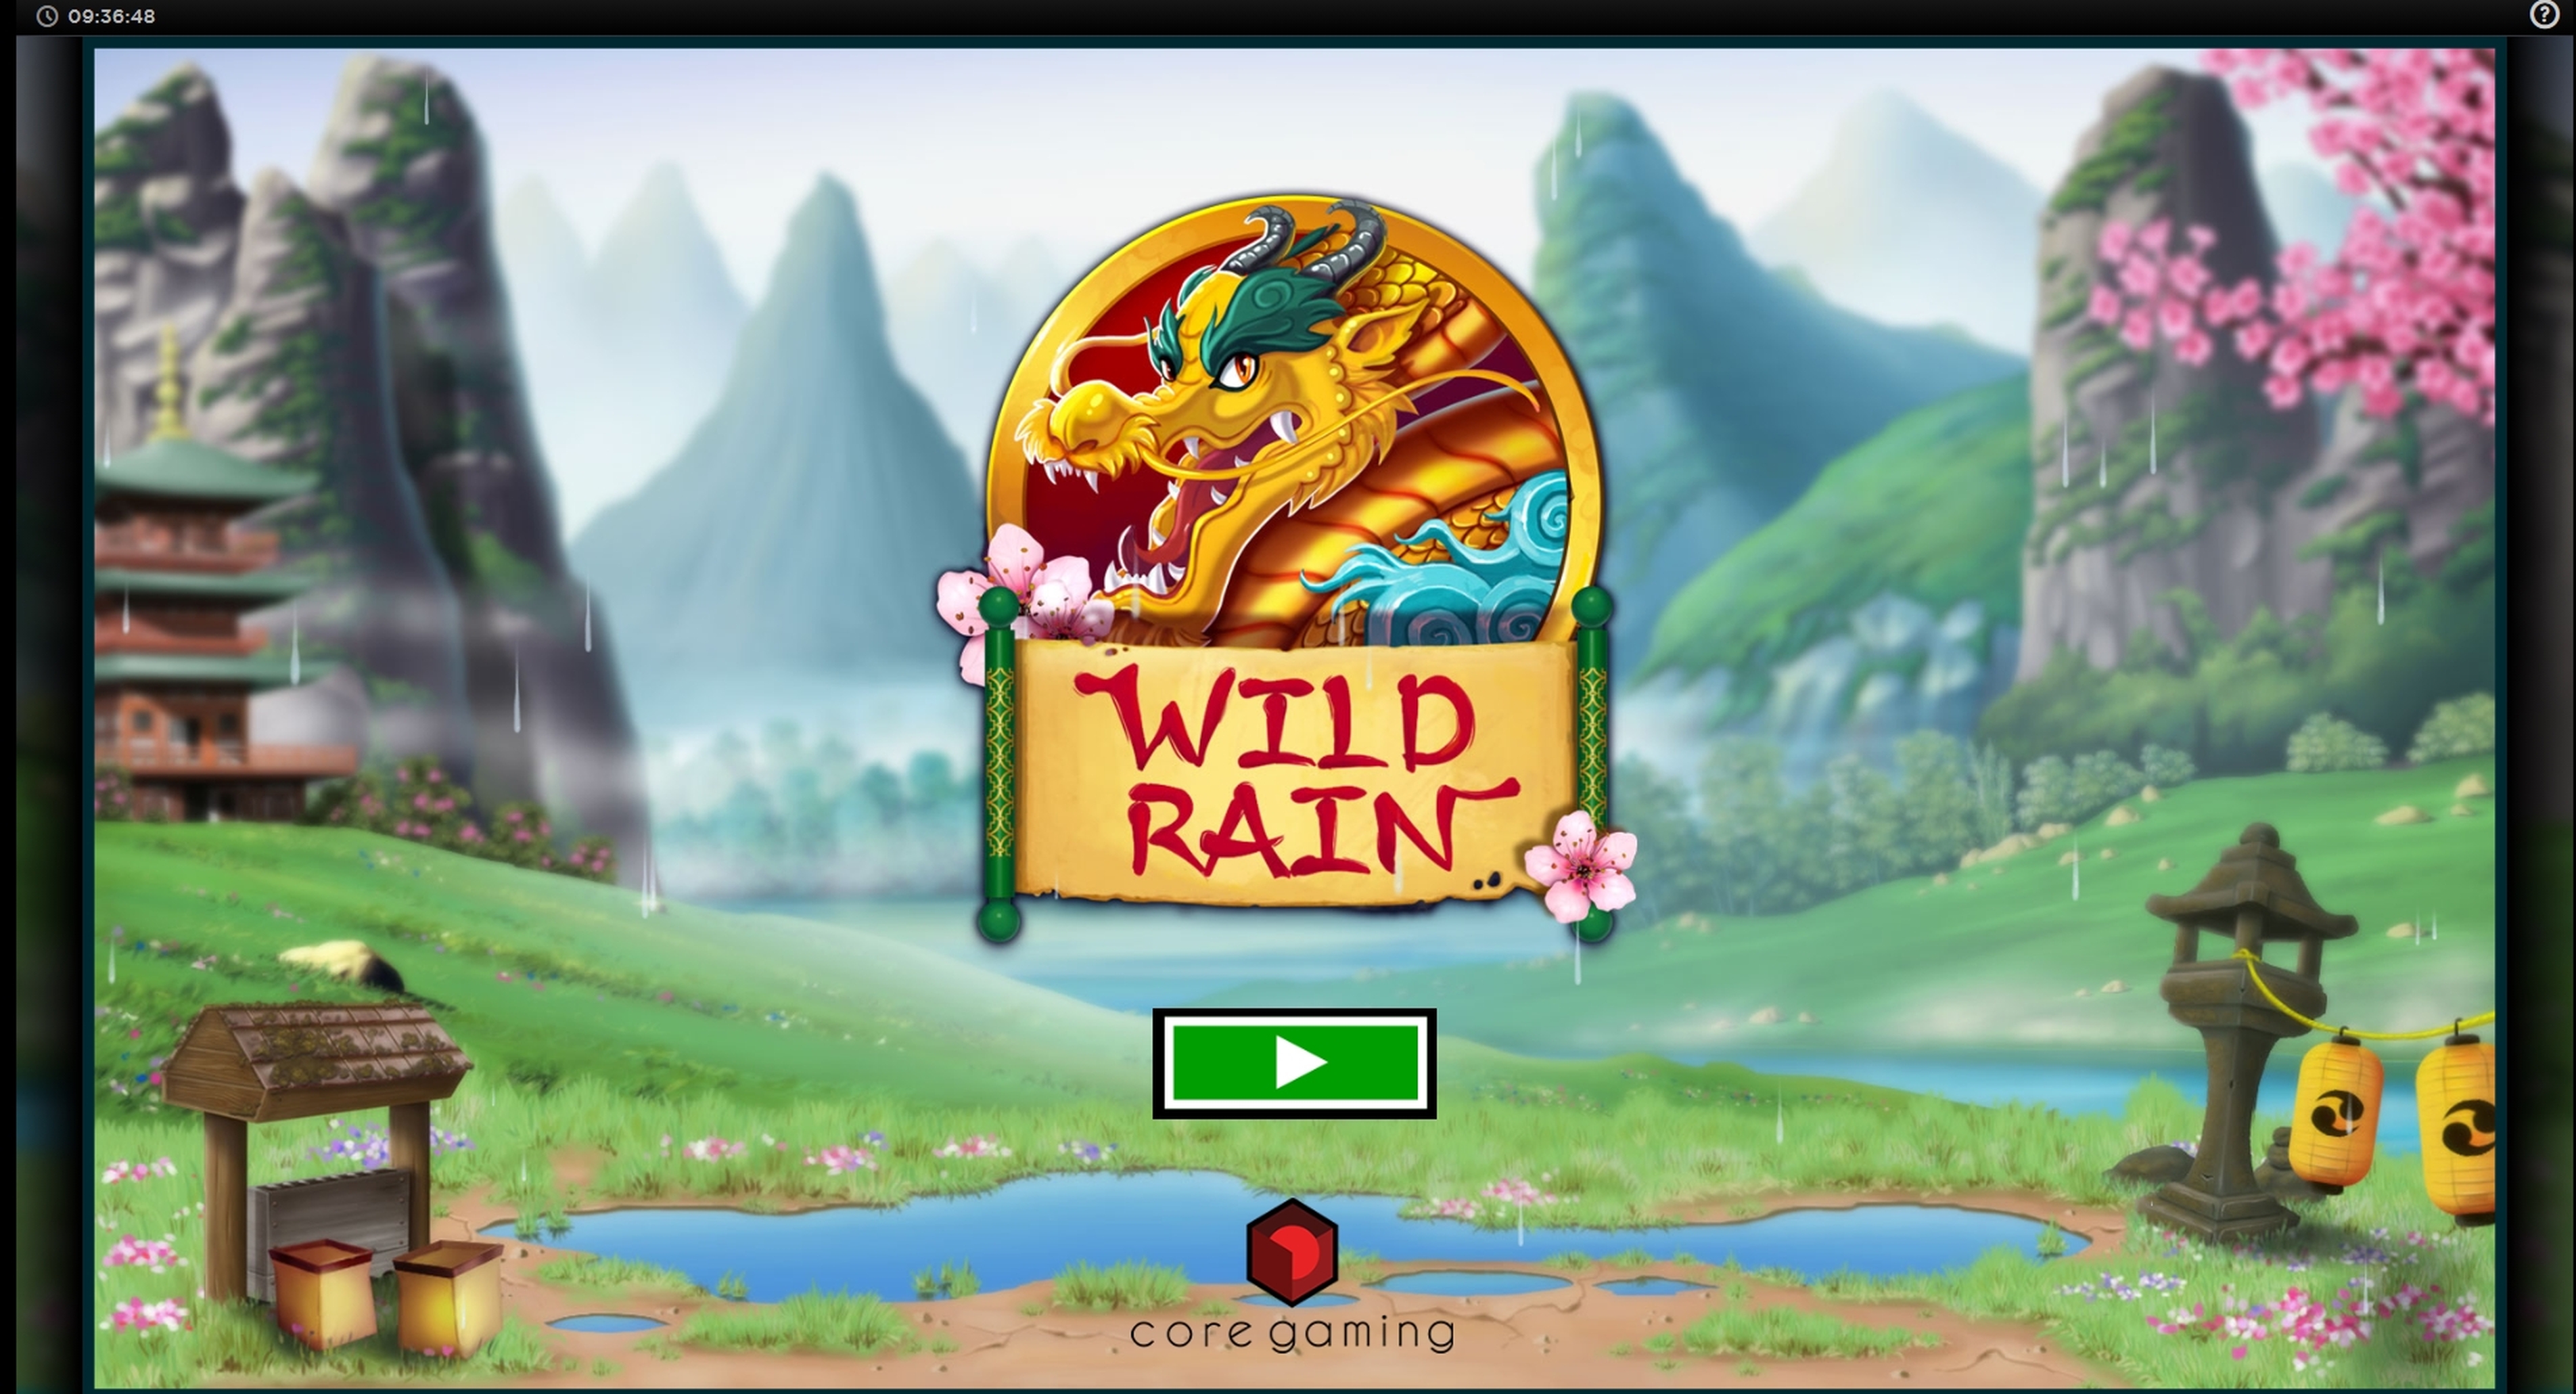 Play Wild Rain Free Casino Slot Game by CORE Gaming